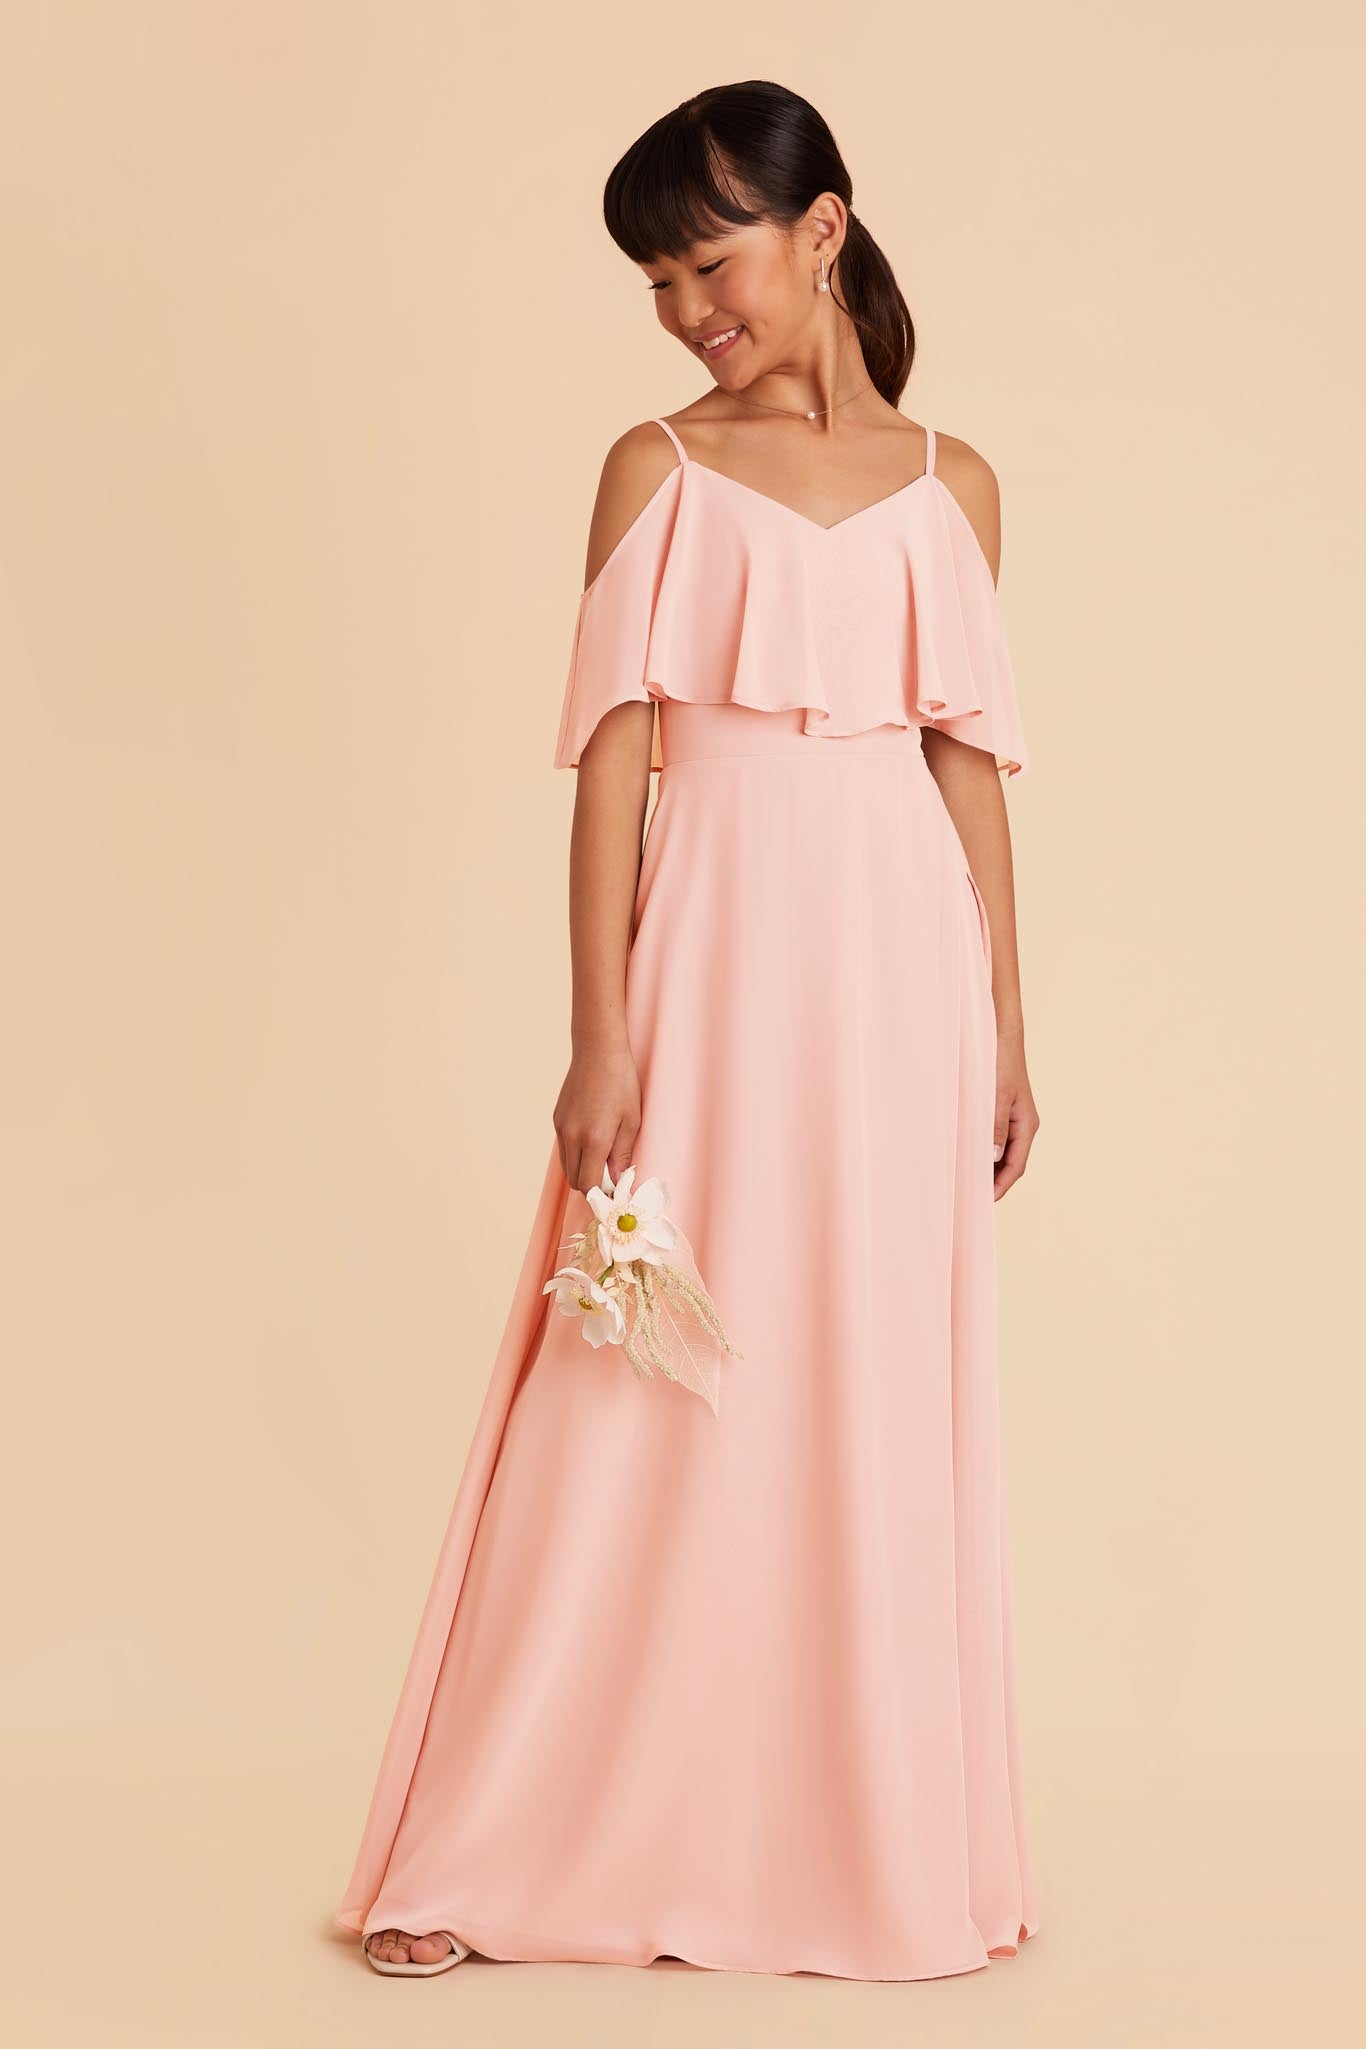 Blush Pink Janie Convertible Junior Dress by Birdy Grey